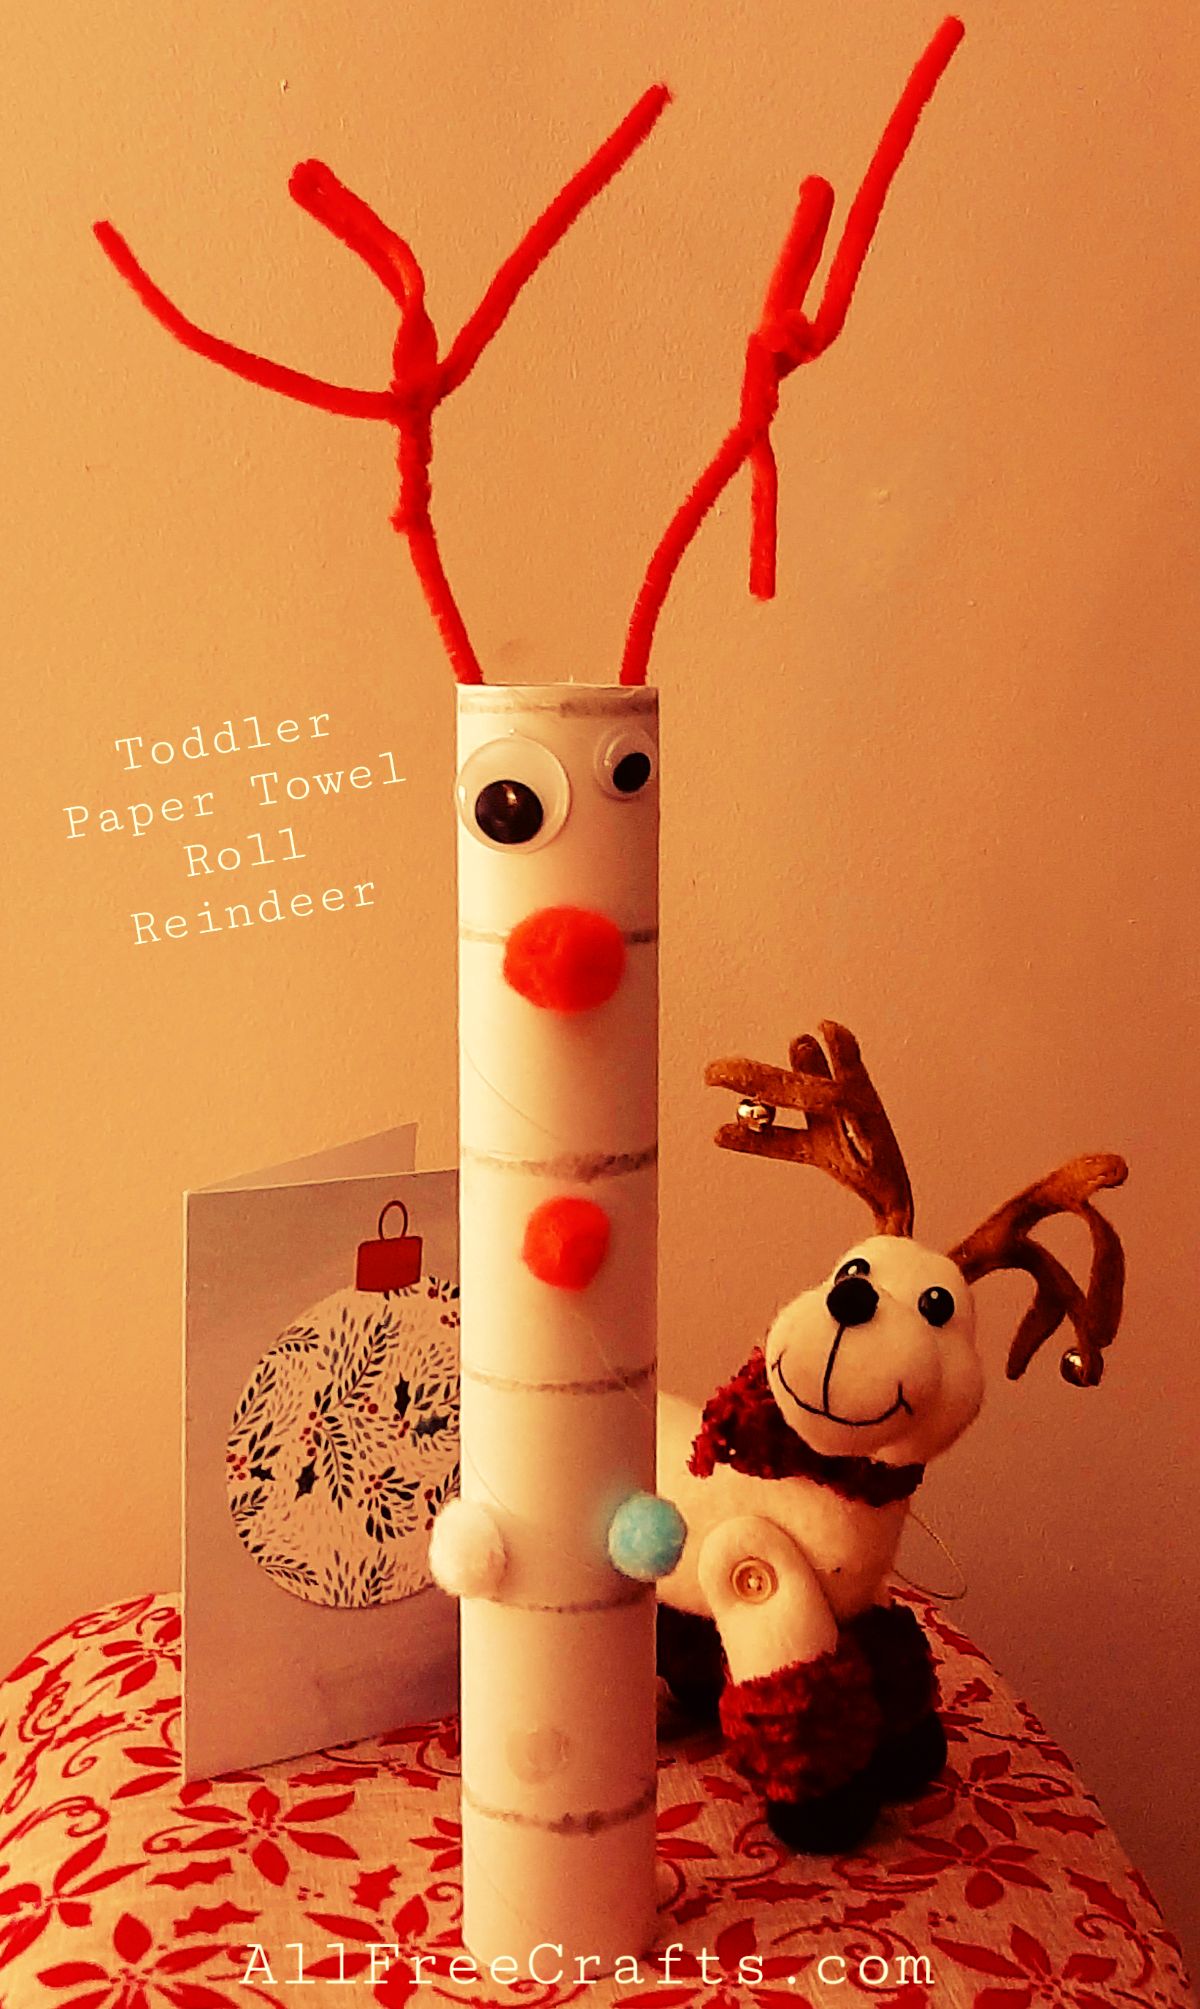 Toddler Paper Towel Roll Reindeer